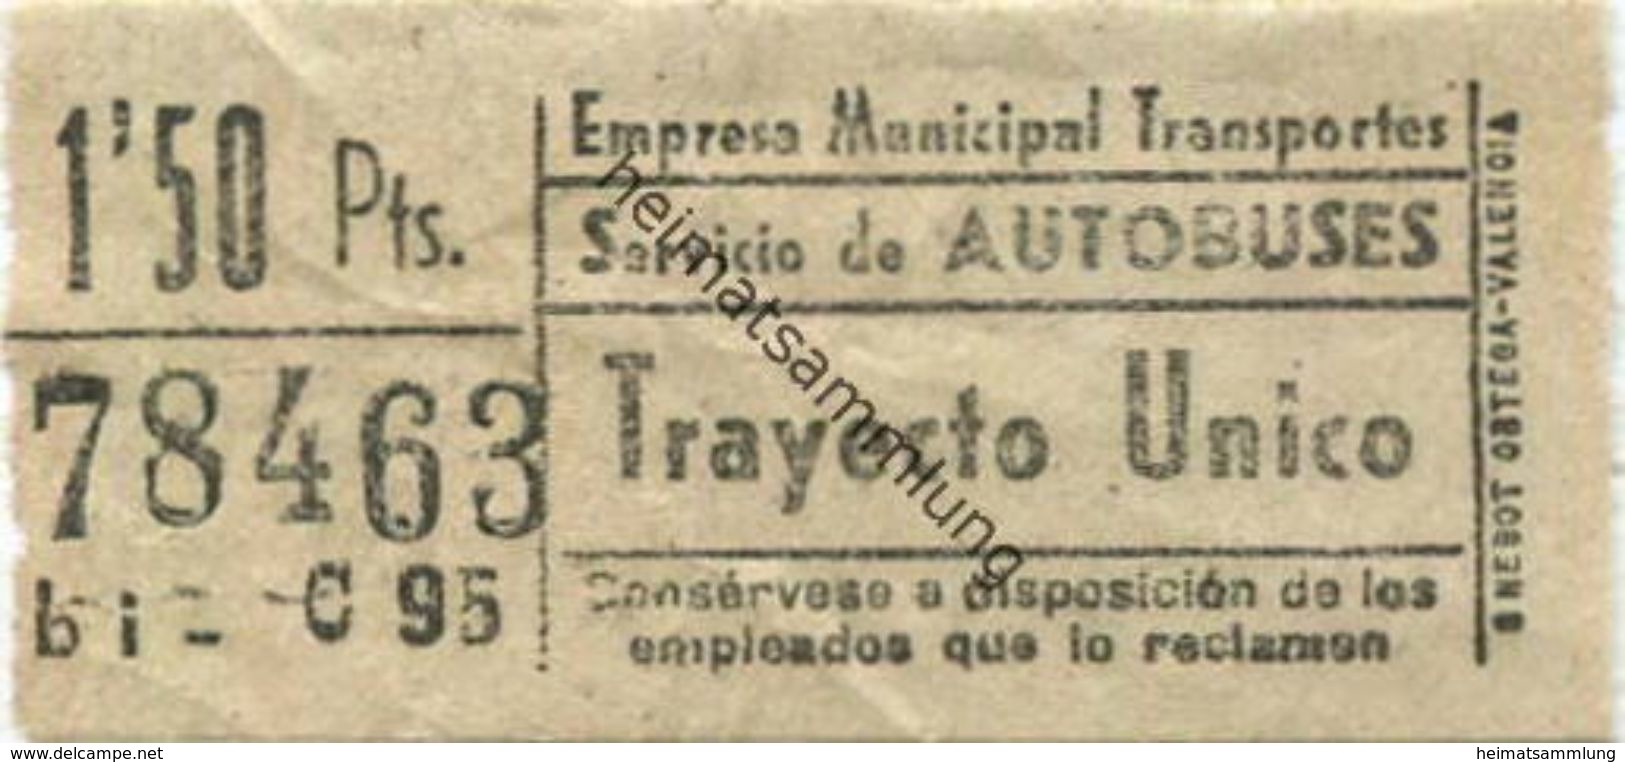 Spanien - Madrid - Empresa Municipal Transportes - Servicio De Autobuses - Trayecto Unico - Fahrschein 50er Jahre - Europe